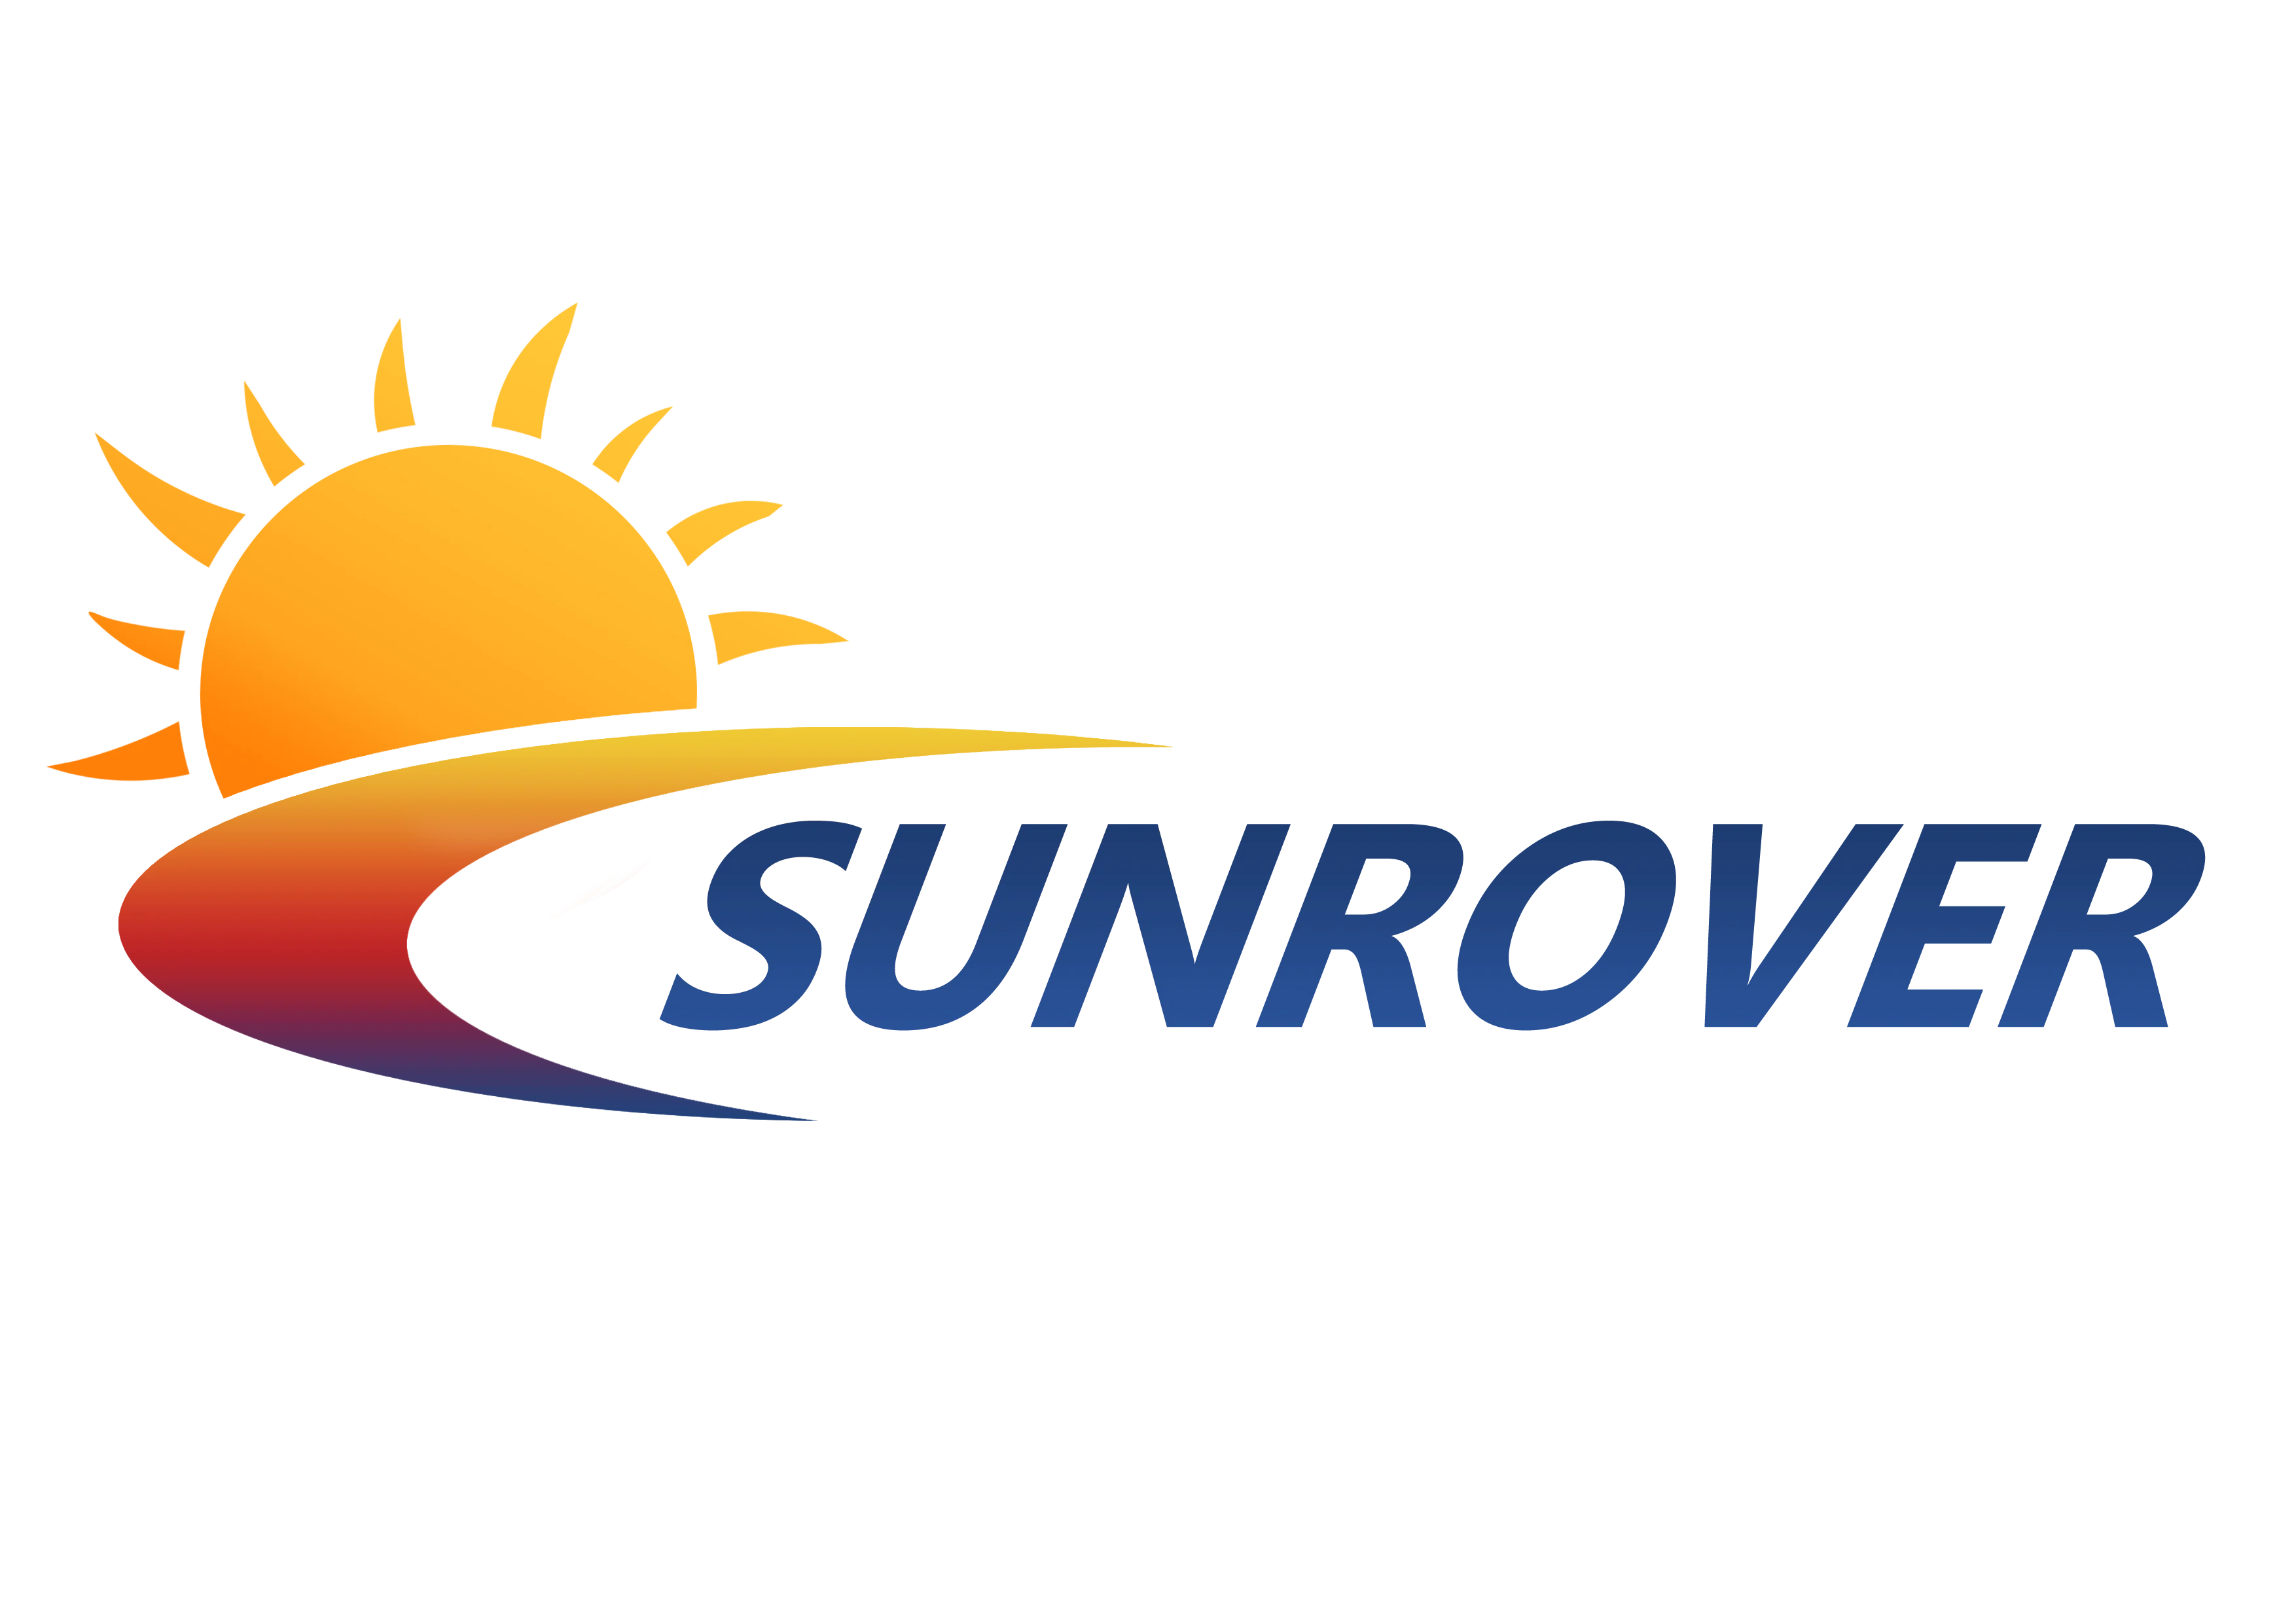 Sunrover Power Co., Ltd.